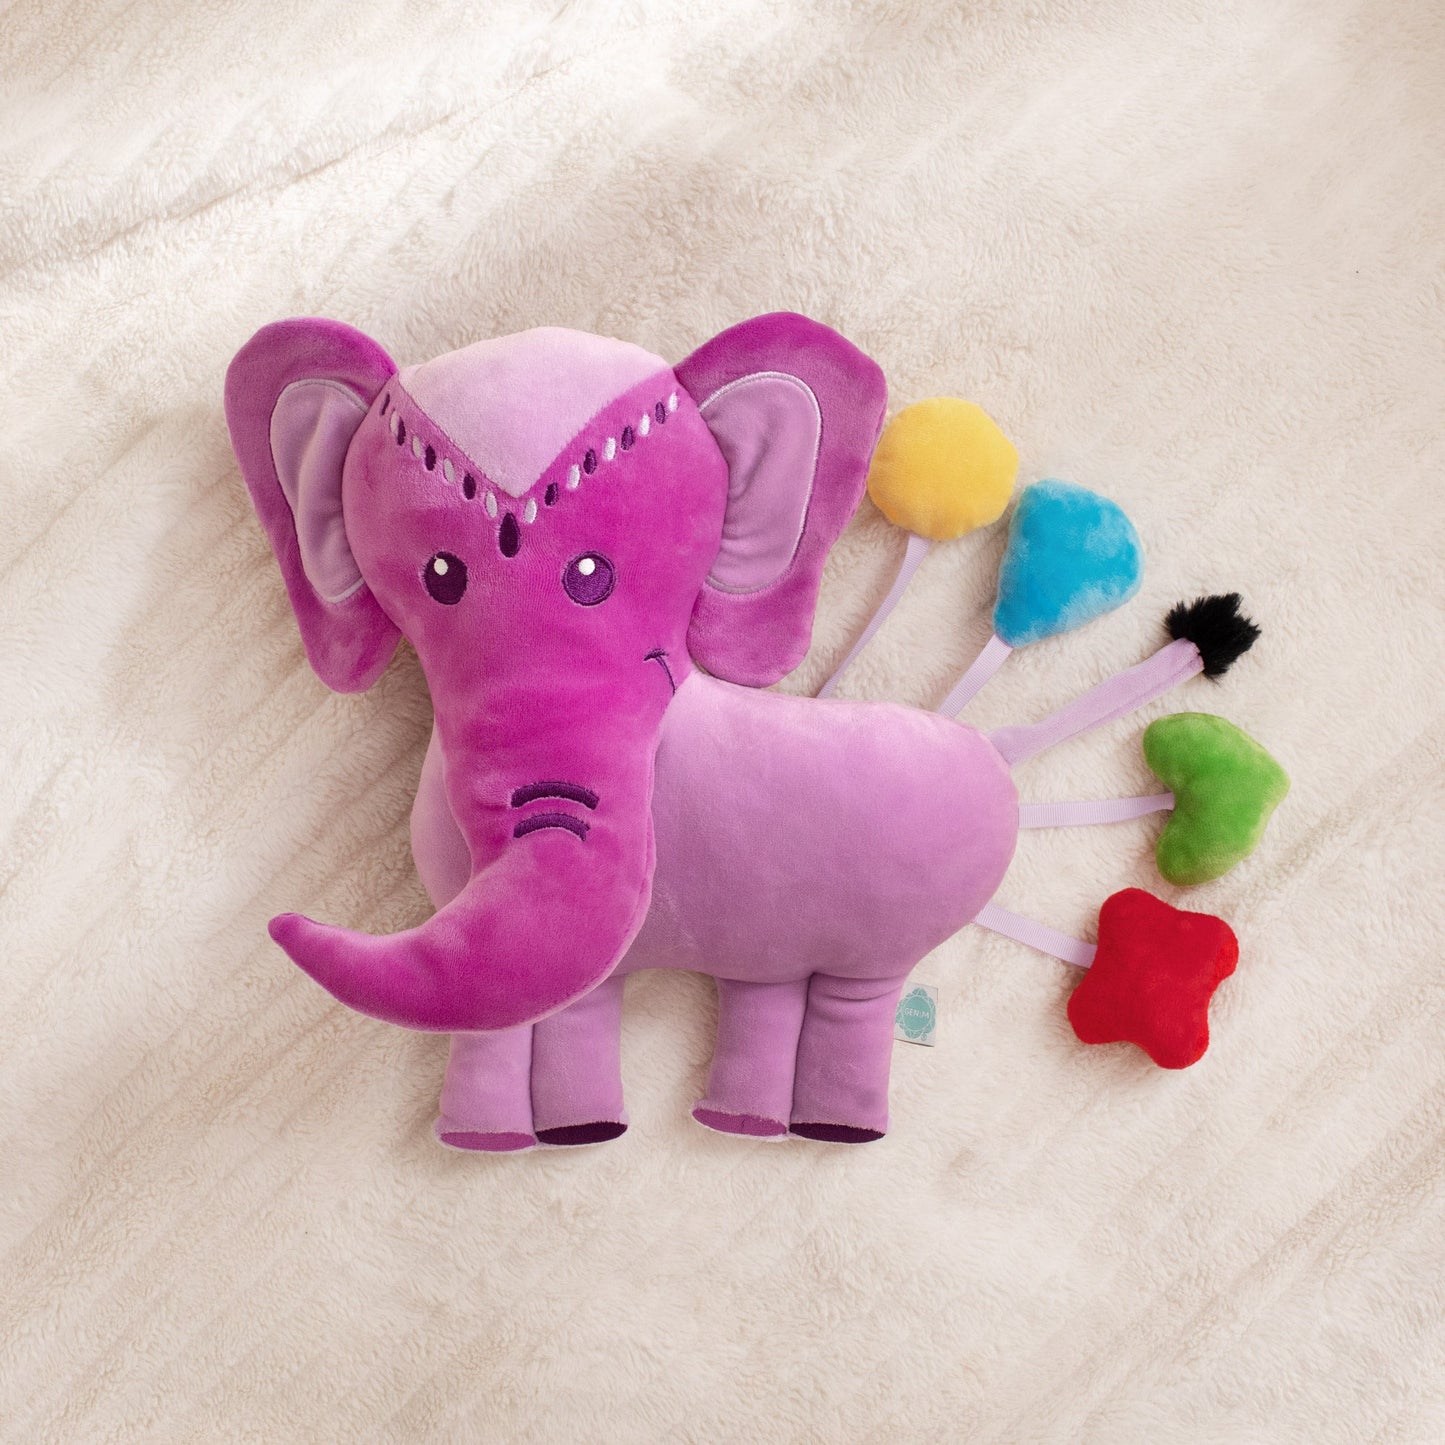 Violet Elephant SnuggleBuddies Emotions Plush by Generation Mindful